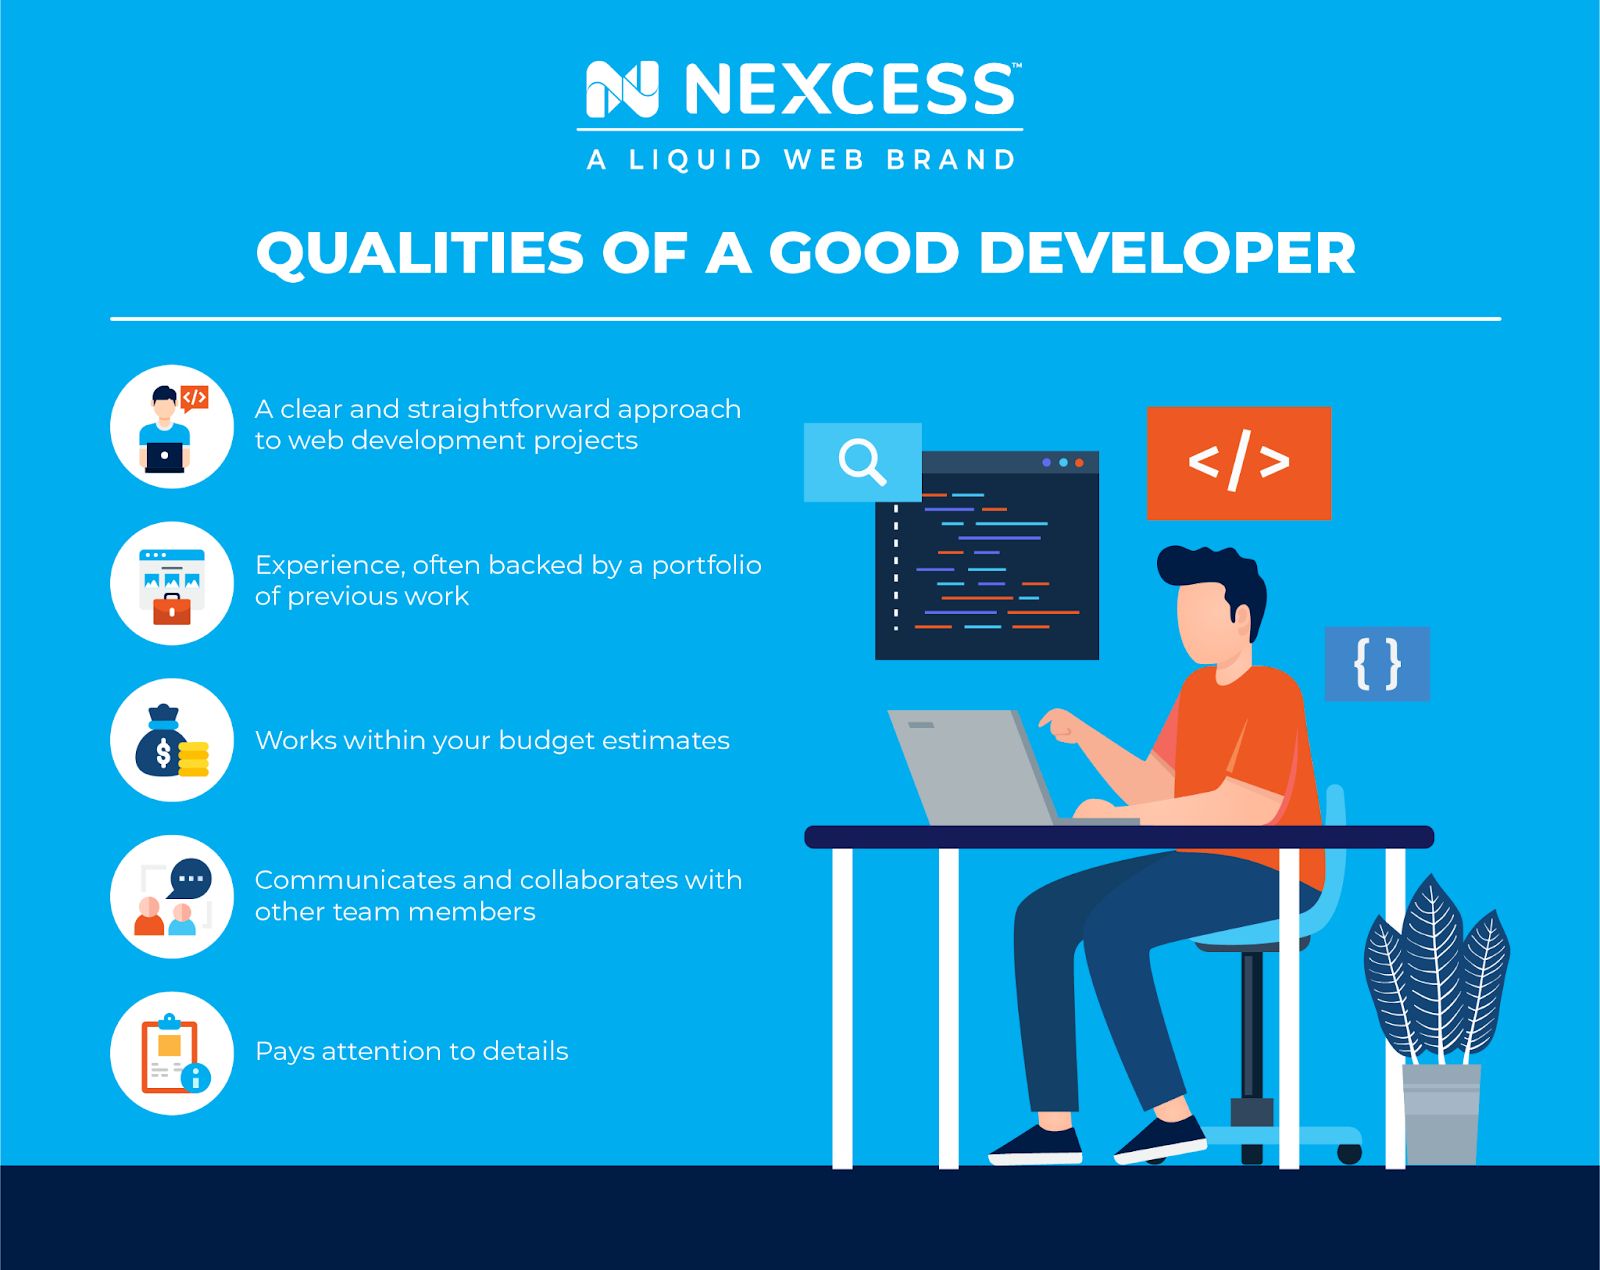 Qualities of a good developer